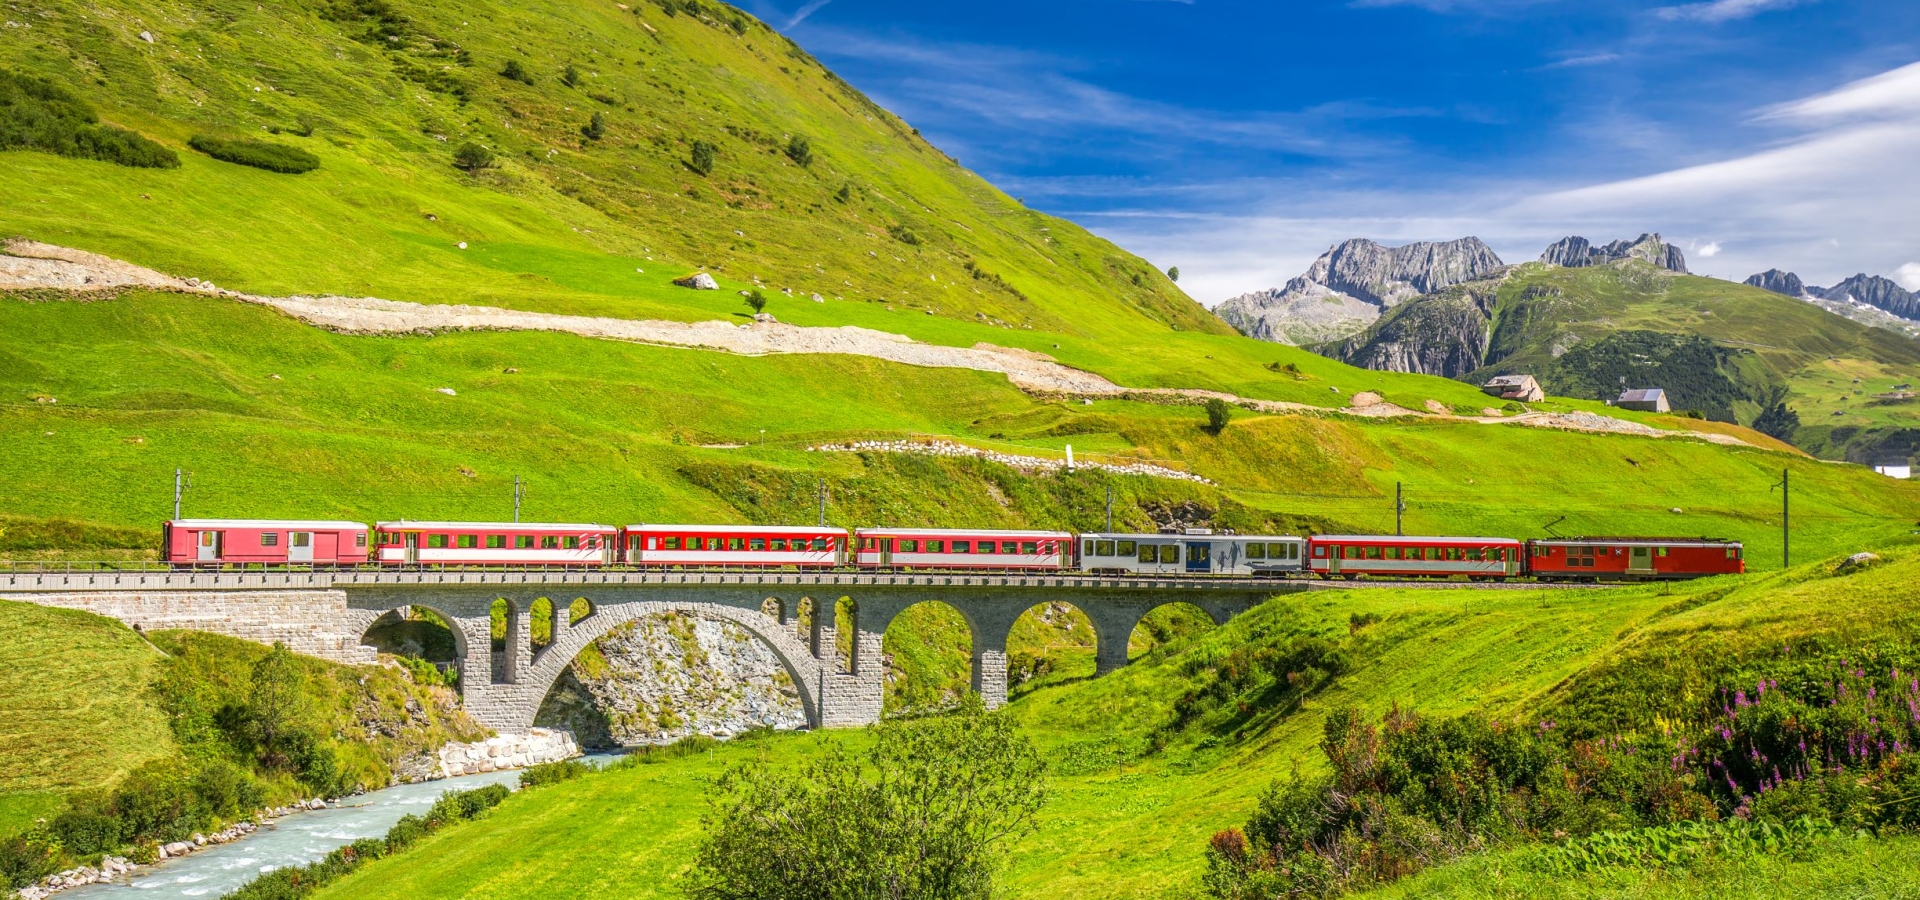 Gotthard Panorama Express Train | Railbookers